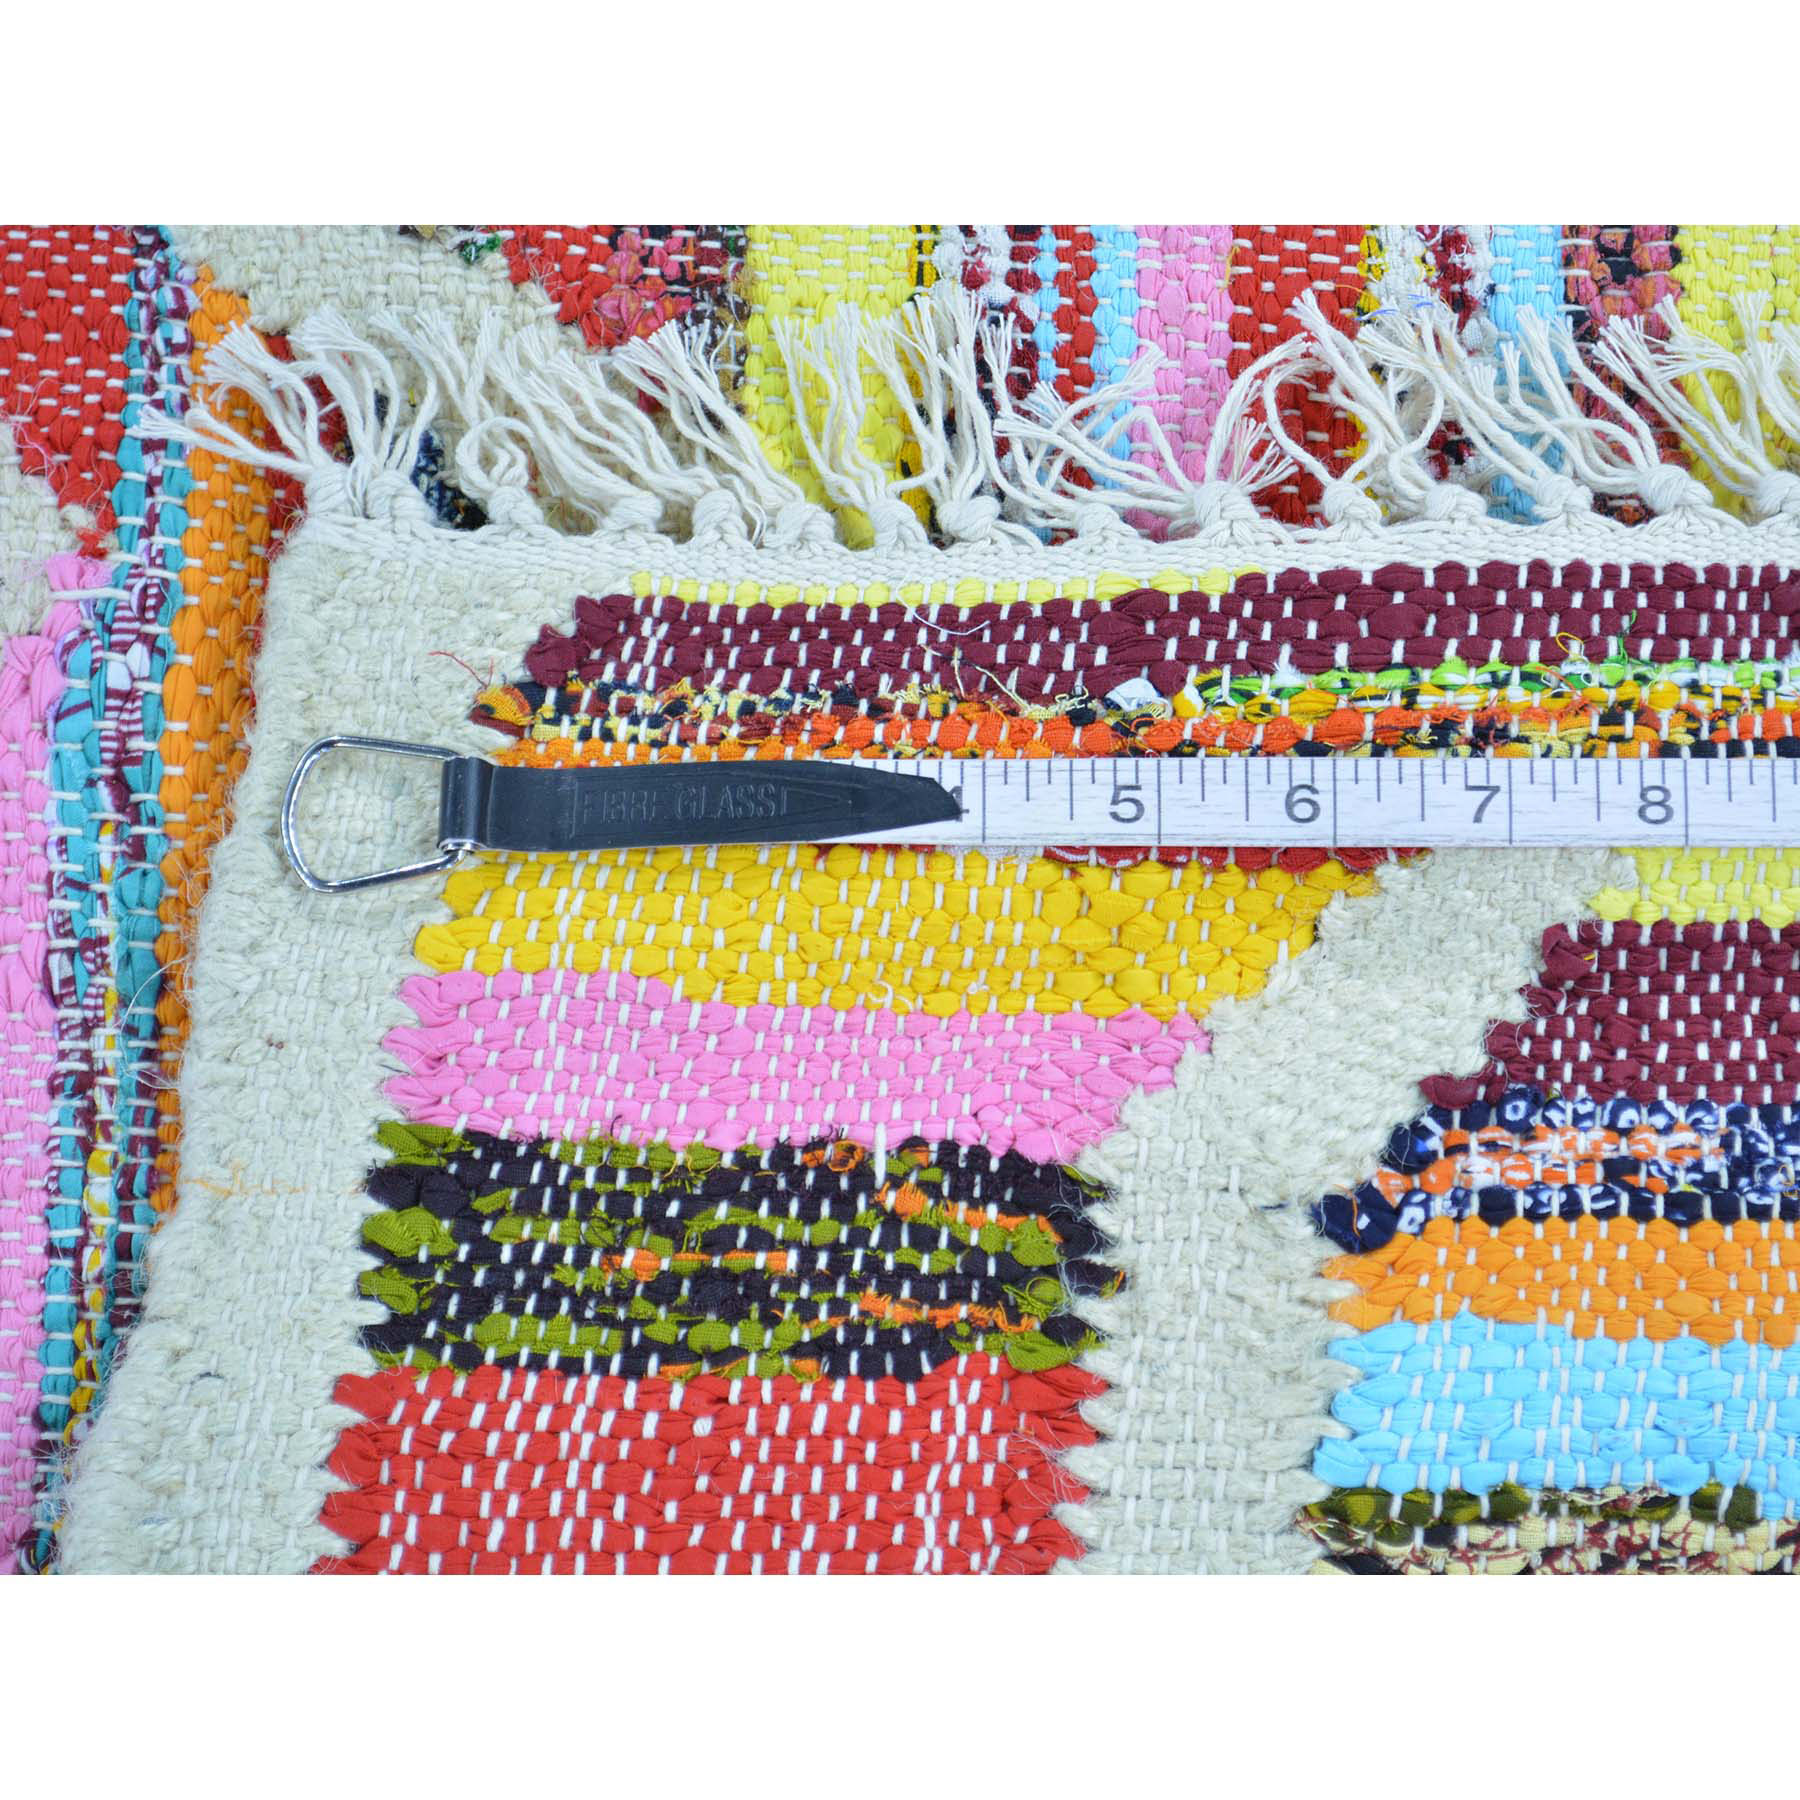 2-6 x8- Hand Woven Colorful Flat Weave Kilim Runner Oriental Rug 